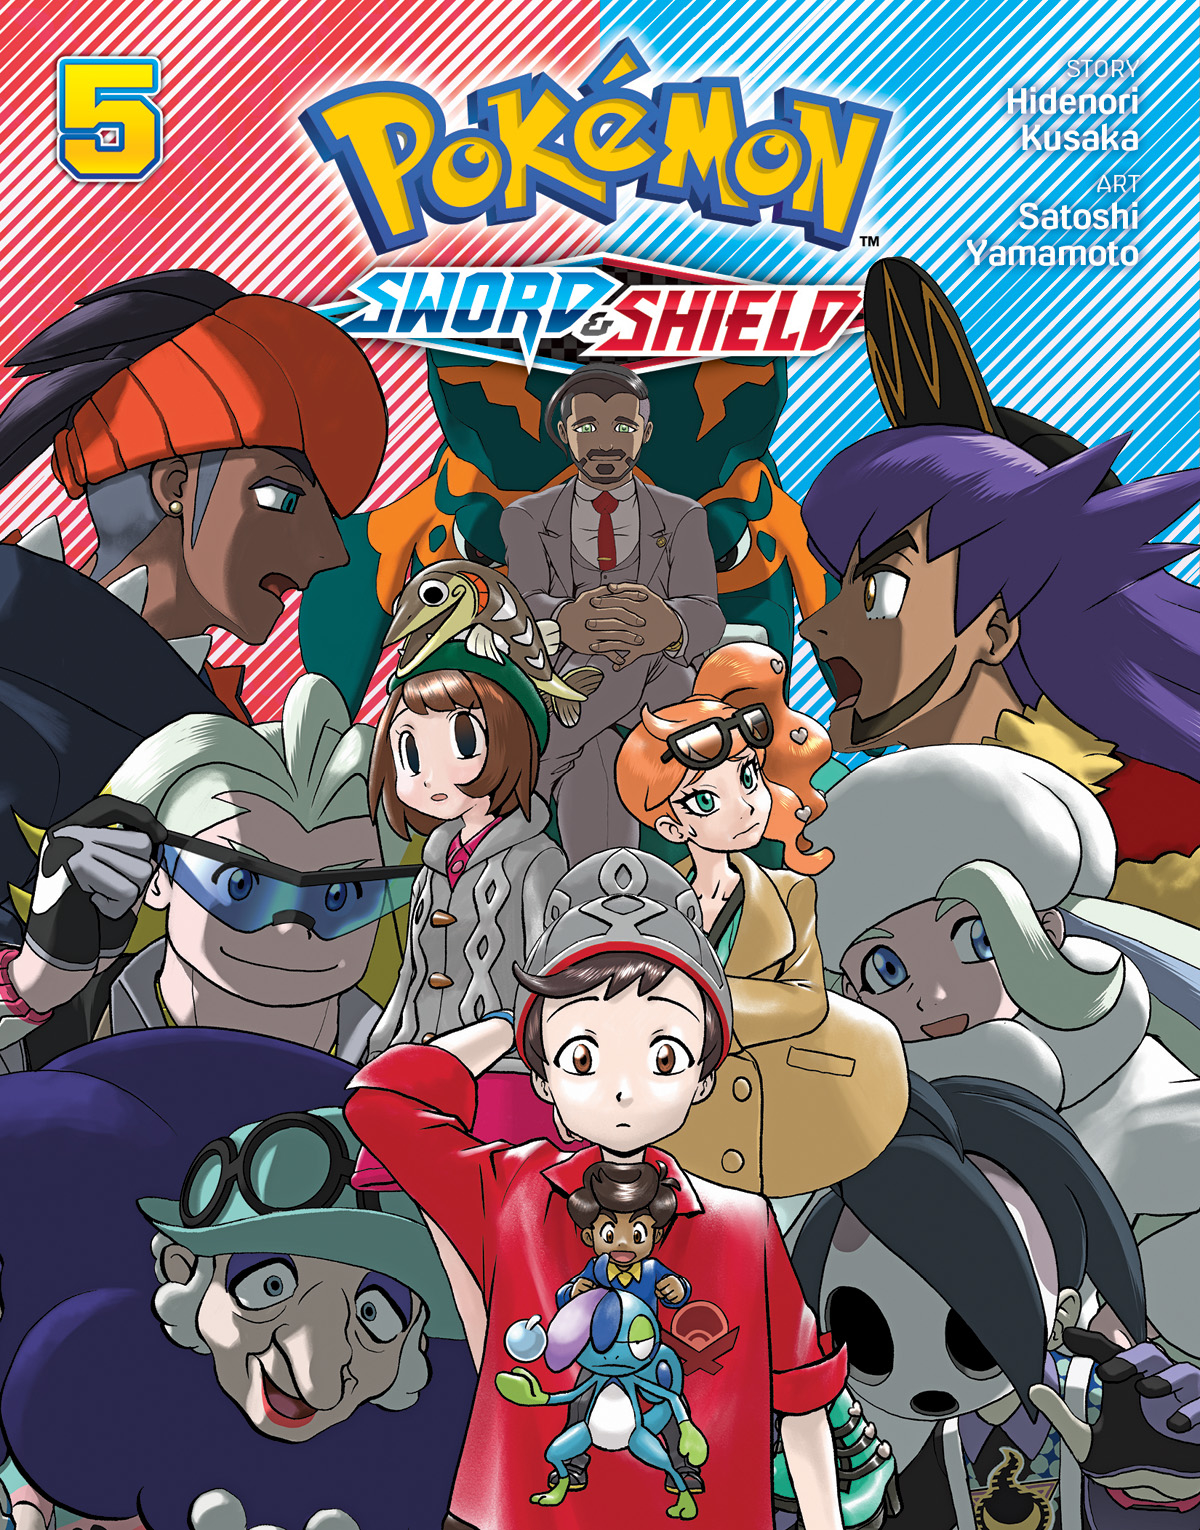 Pokémon Sword & Shield Manga Volume 5